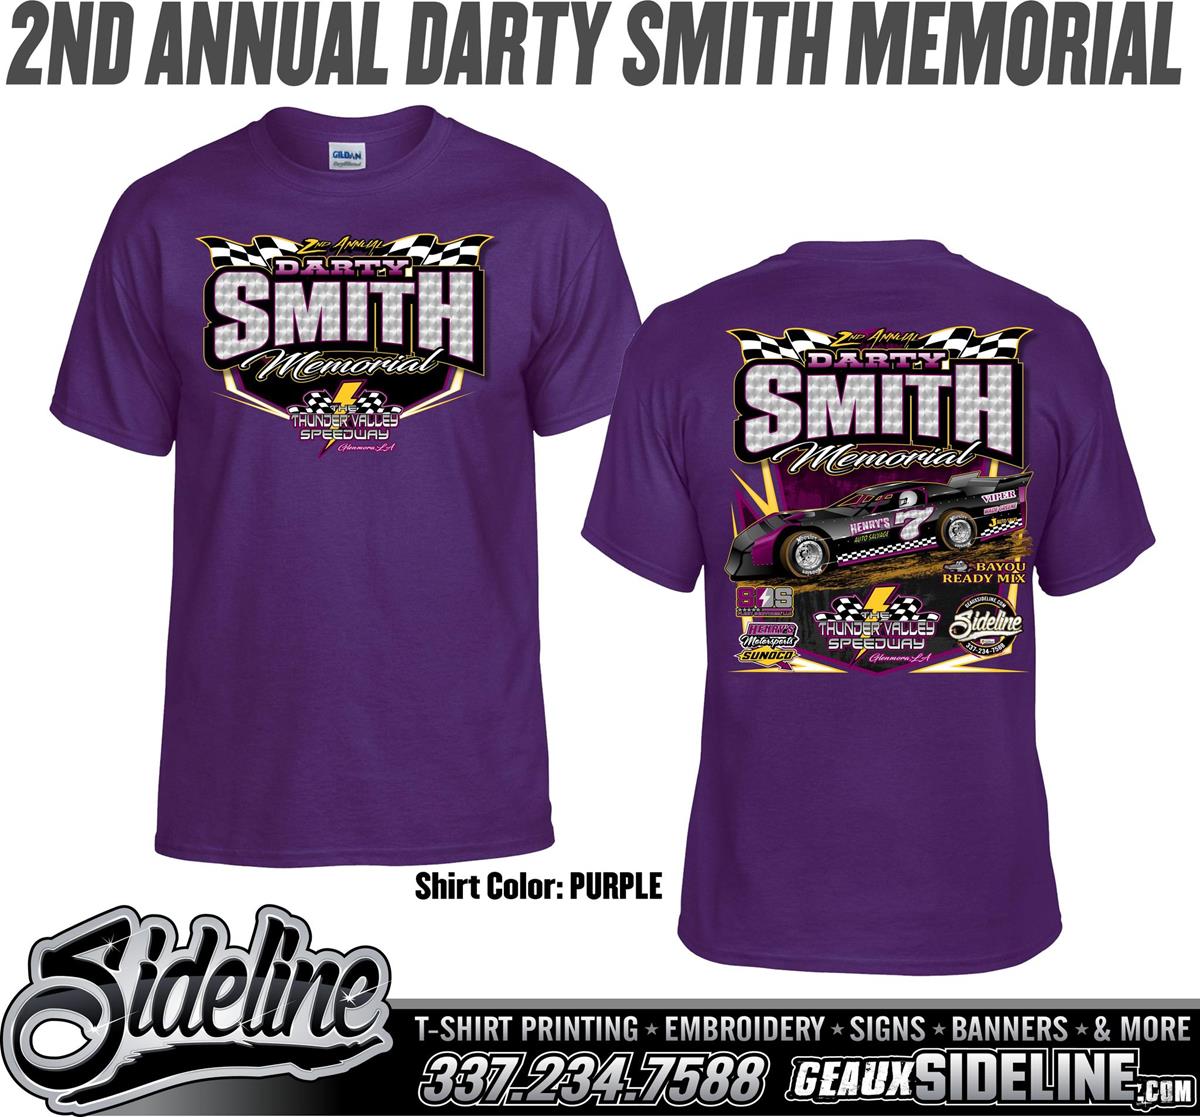 Get your Darty Smith Memorial Swag!